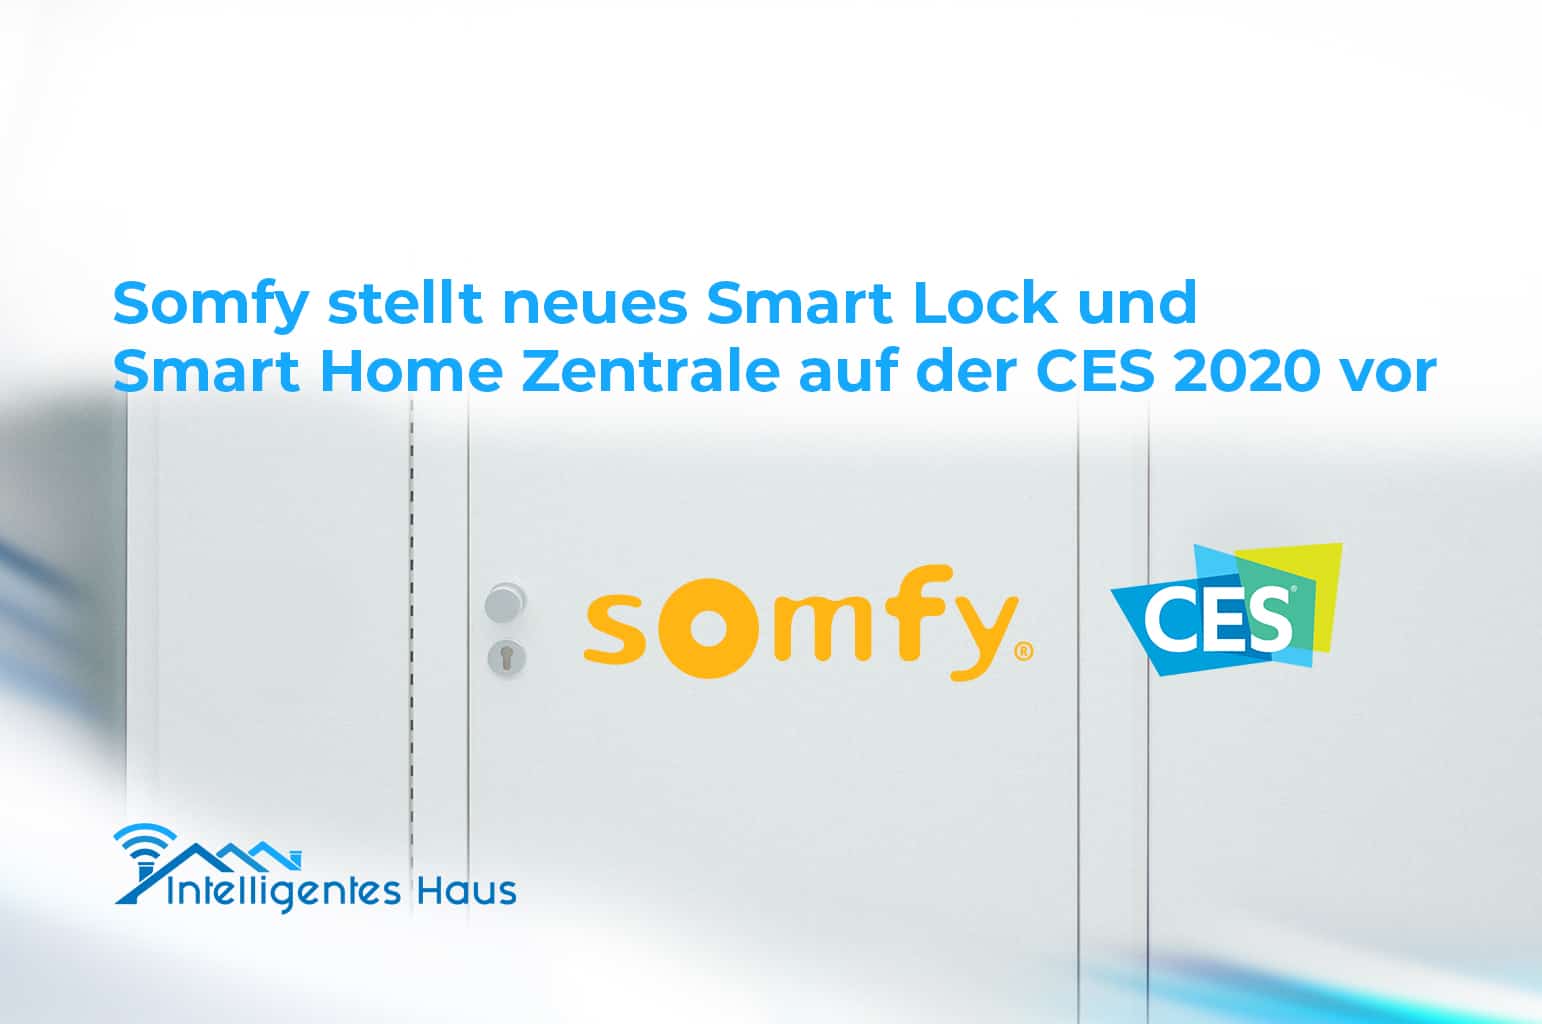 Somfy auf der CES 2020